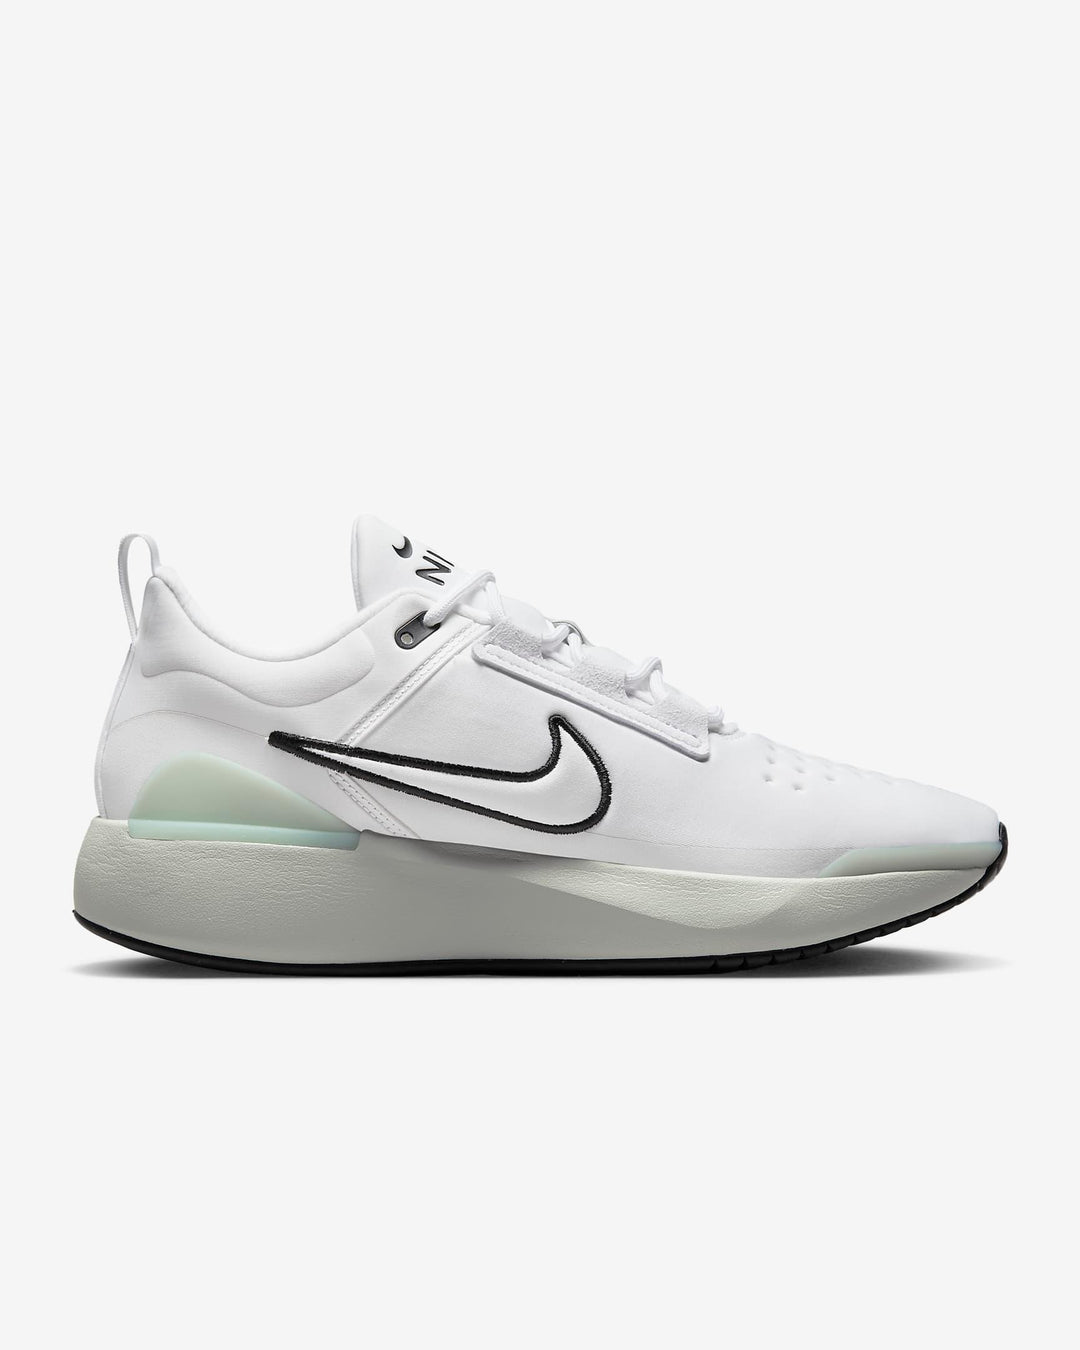 Giày Nike E-Series 1.0 Men Shoes #White - Kallos Vietnam